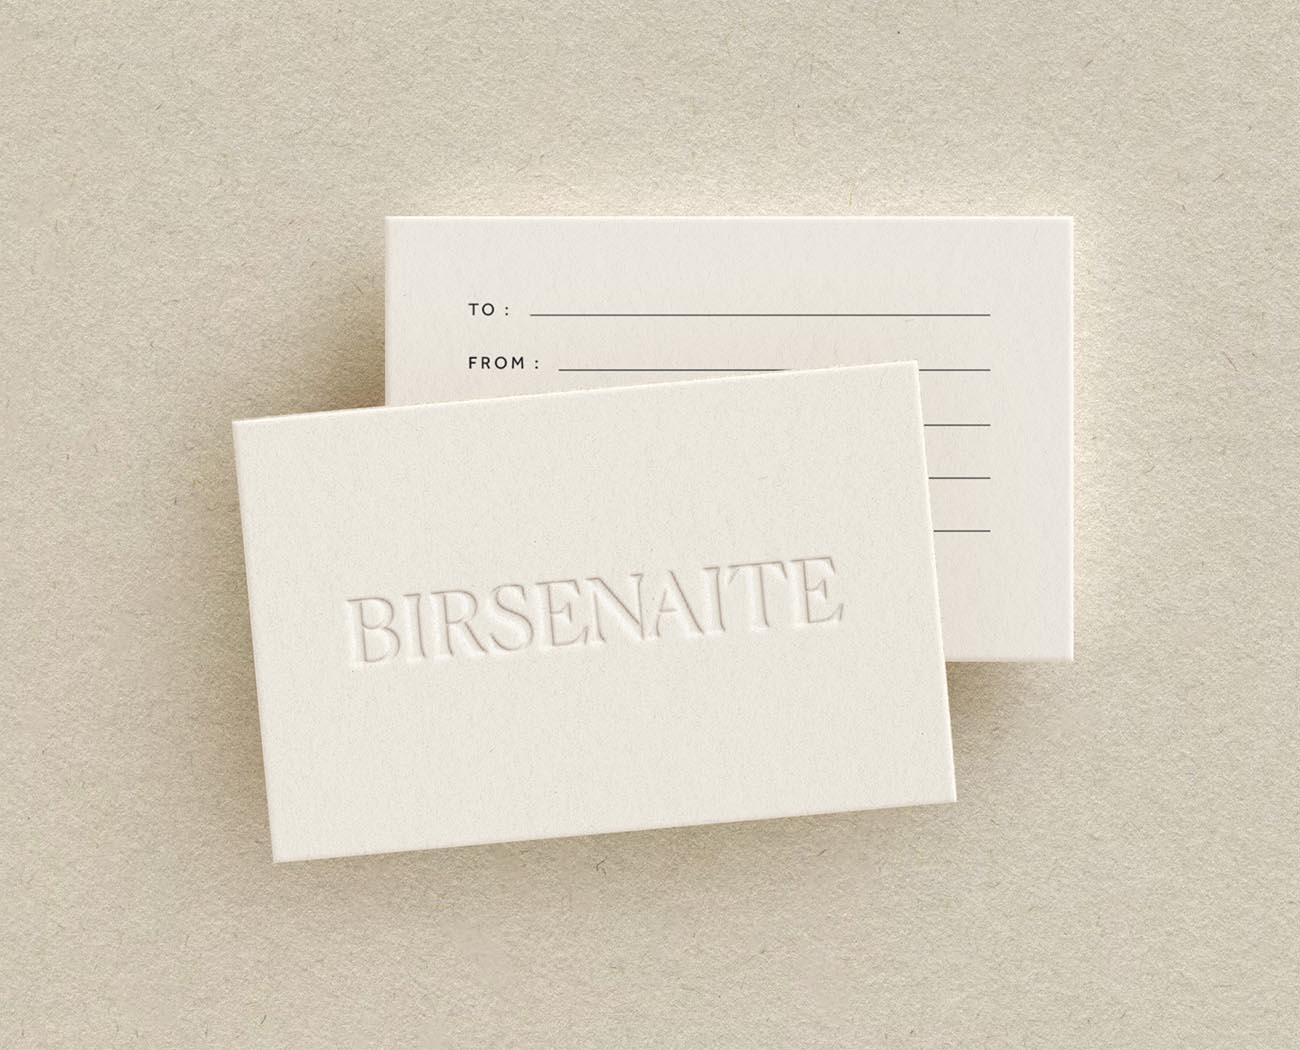 Birsenaite logo design on gift cards